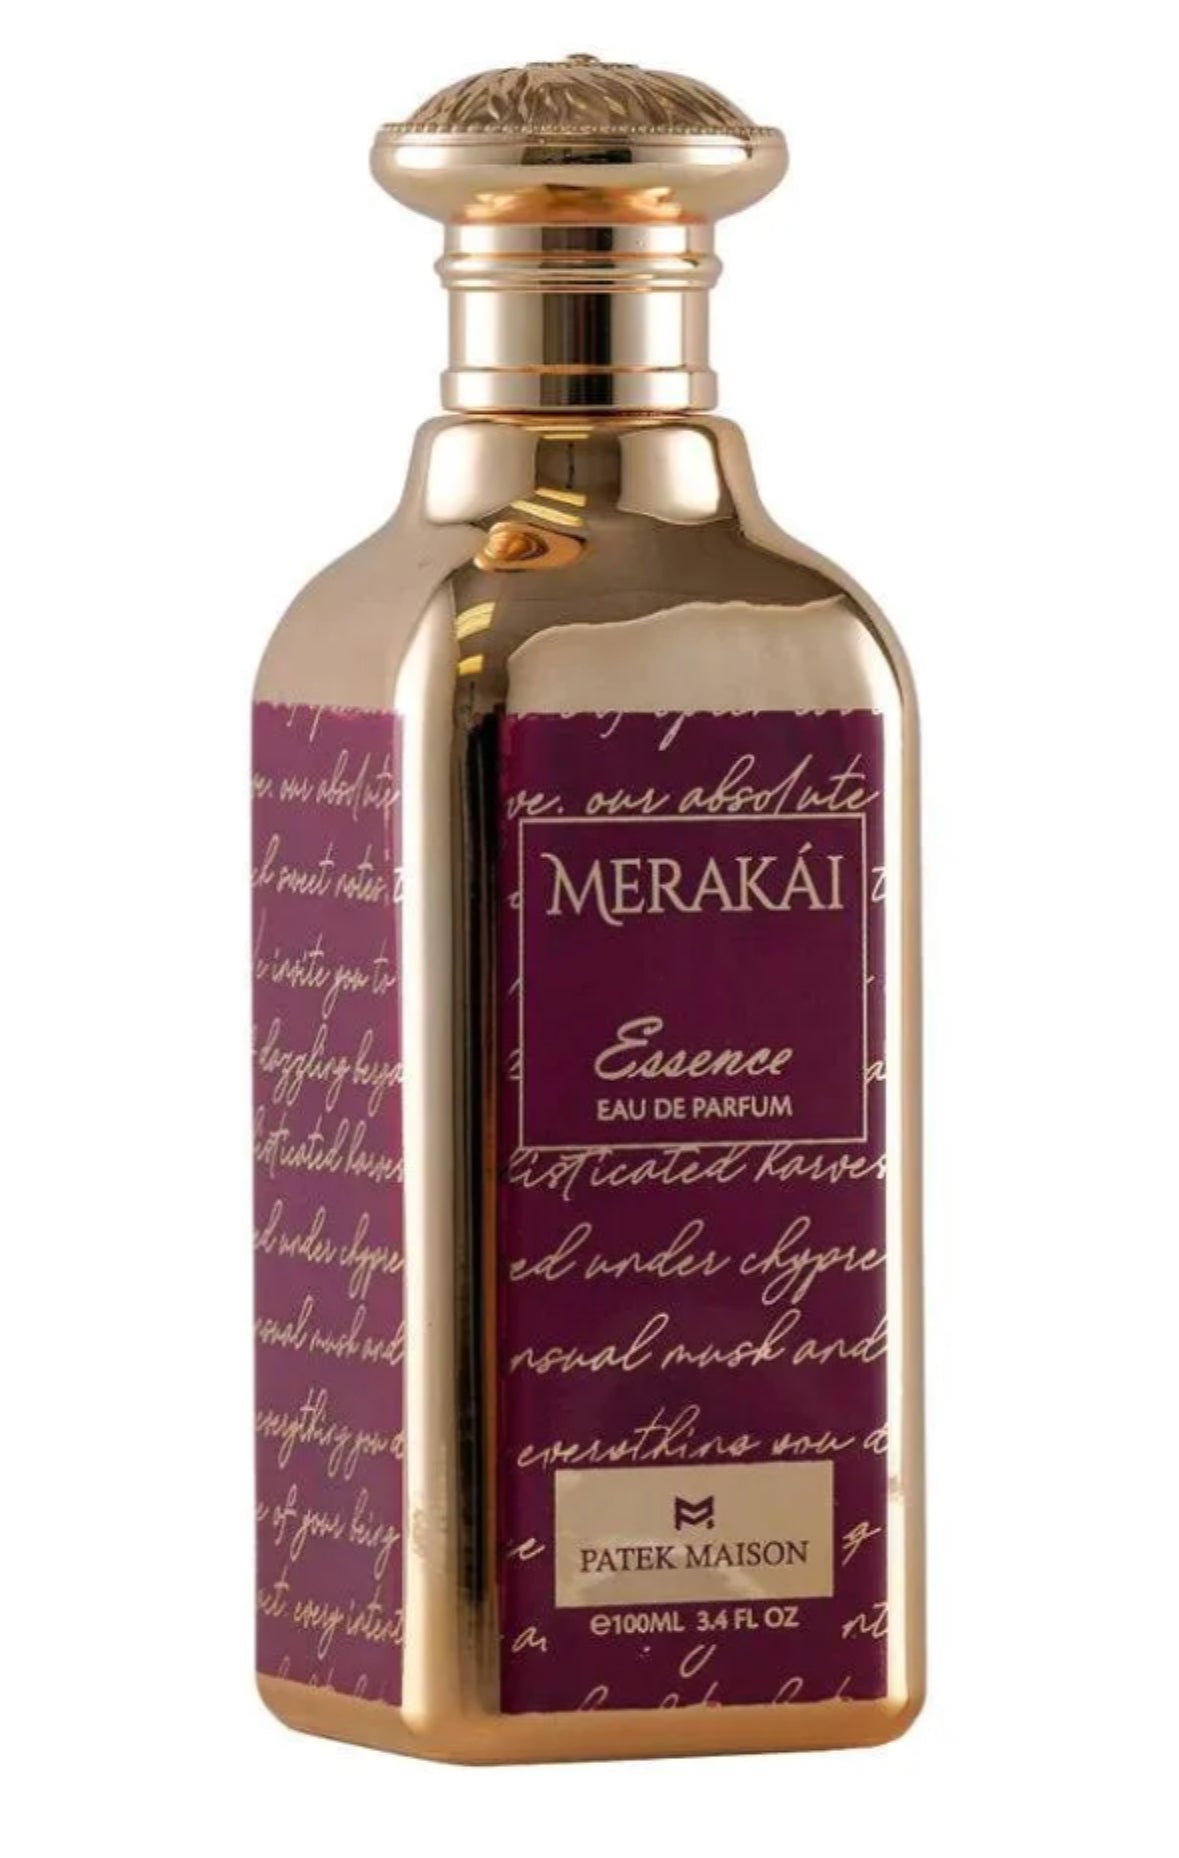 Merakai Essence by Patek Maison